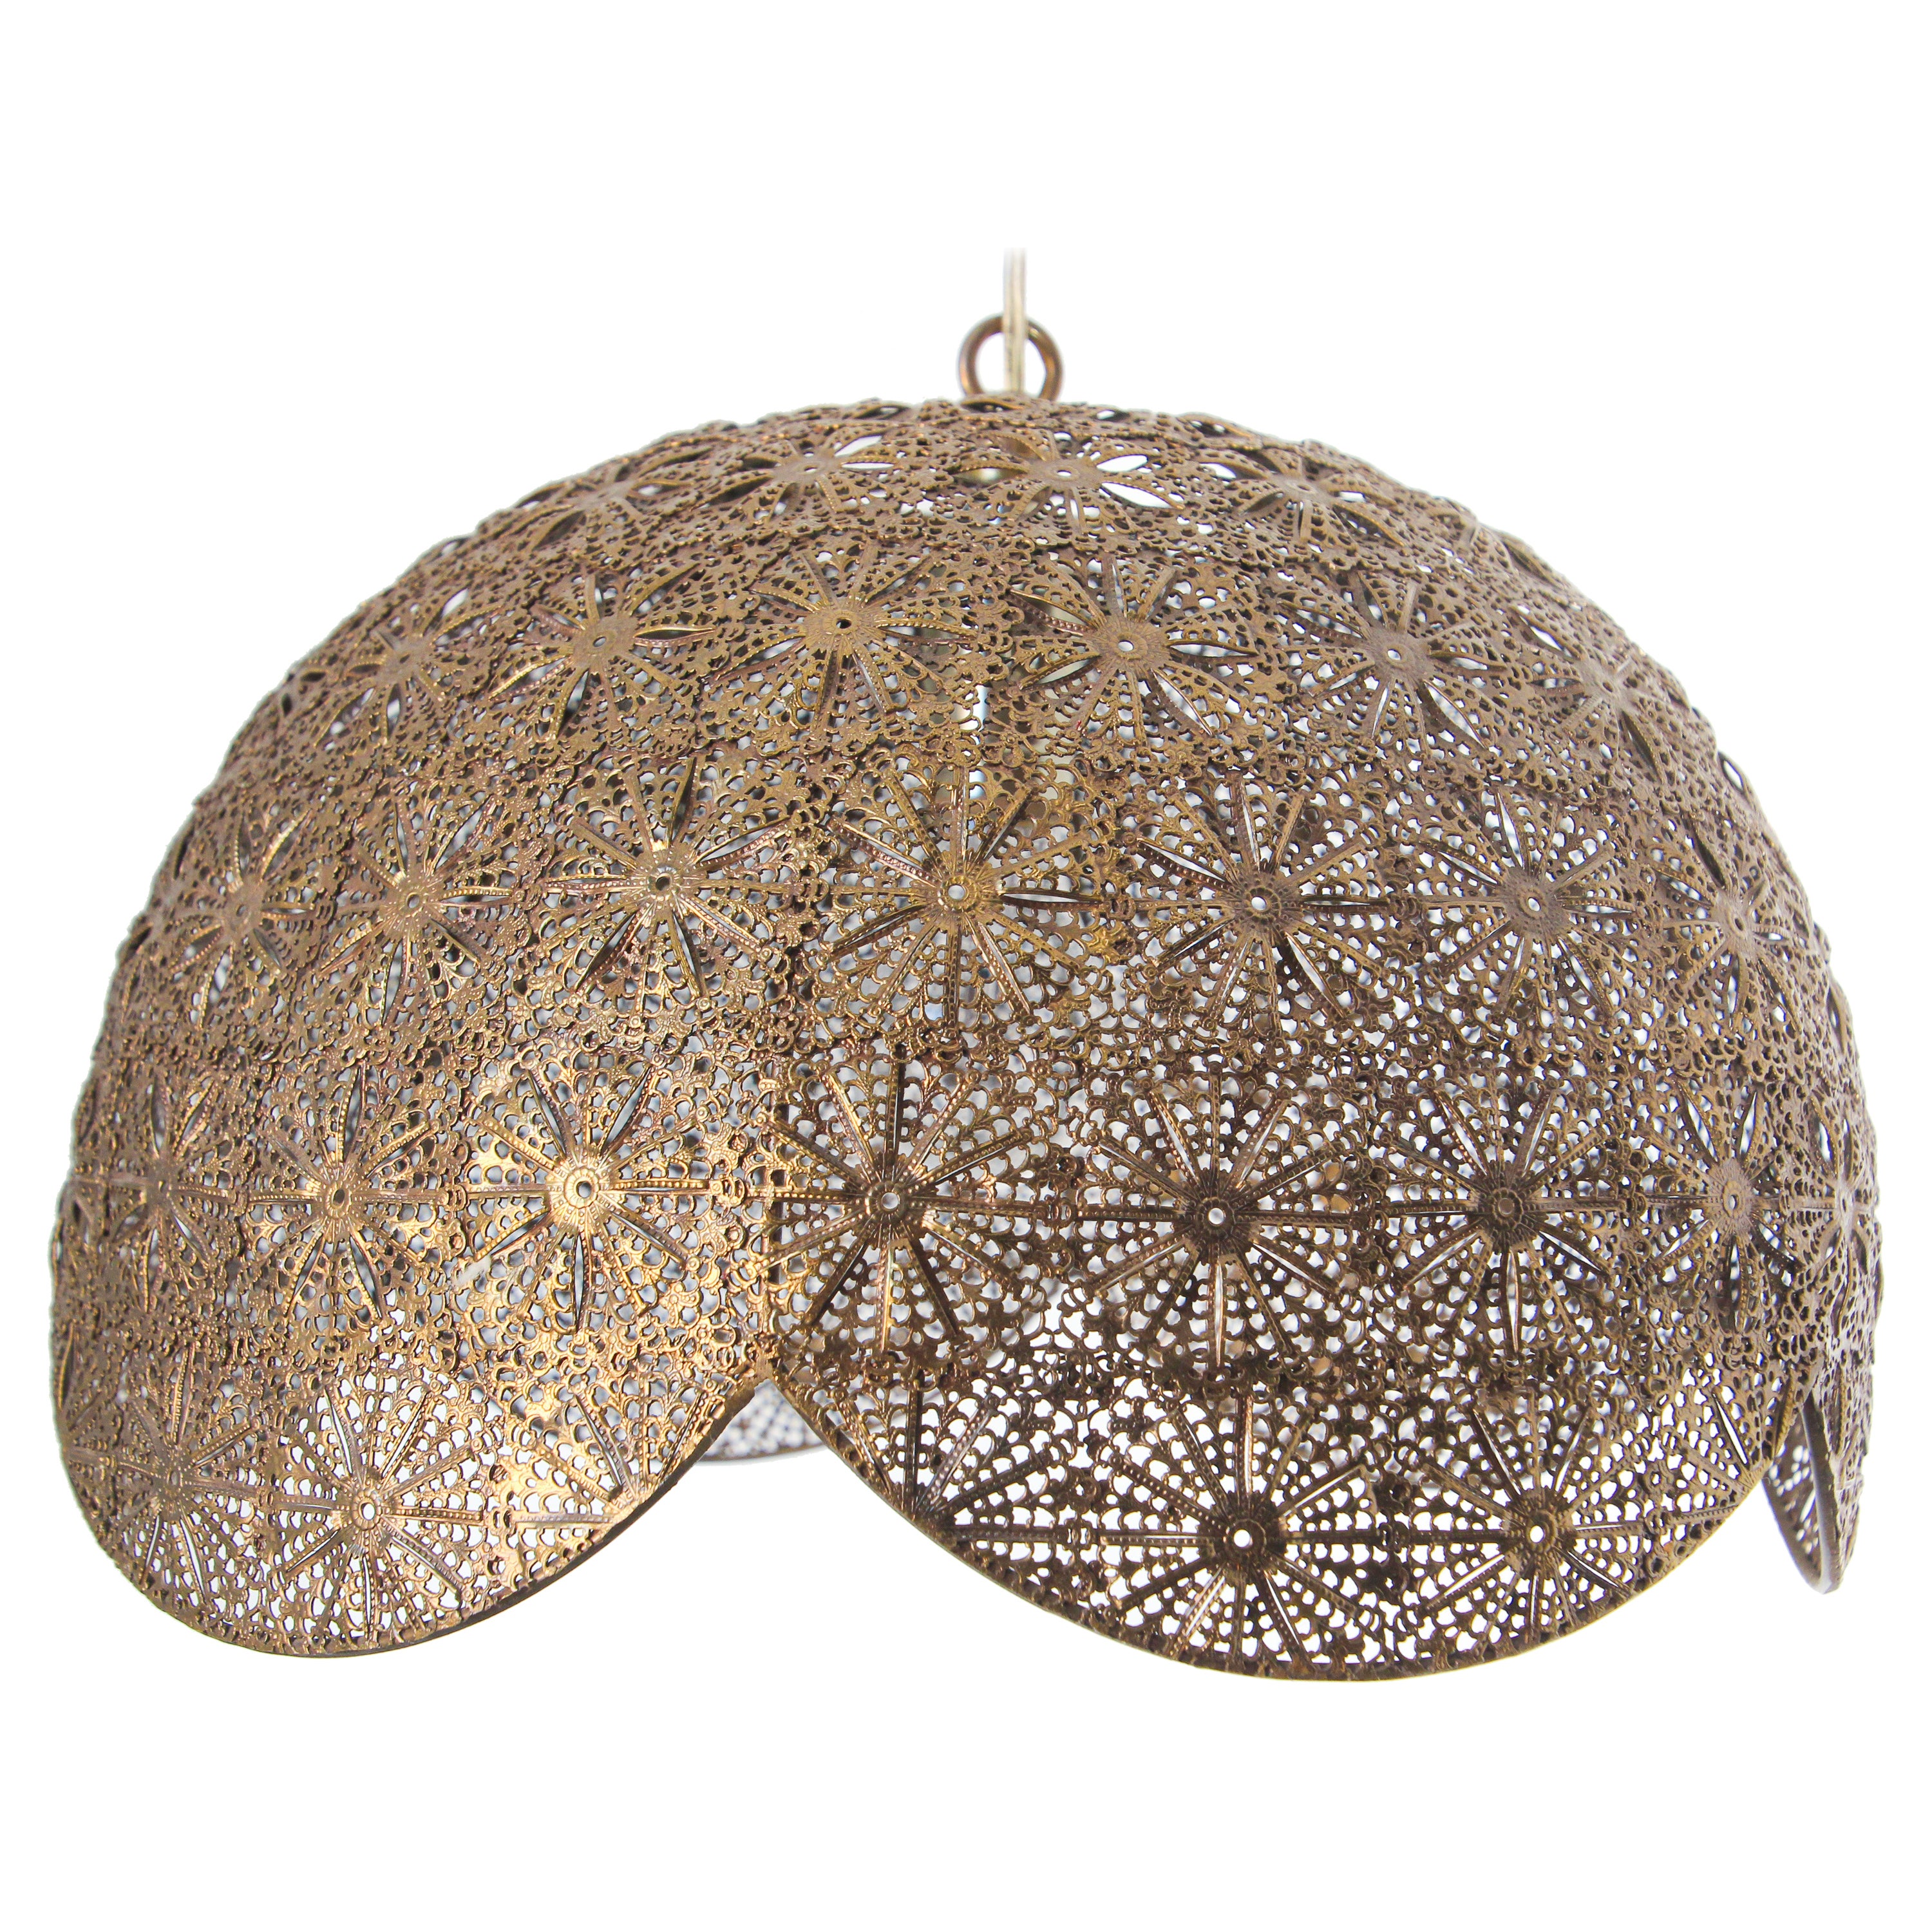 Middle Eastern Moorish Fine Filigree Pierced Brass Hanging Lamp Shade